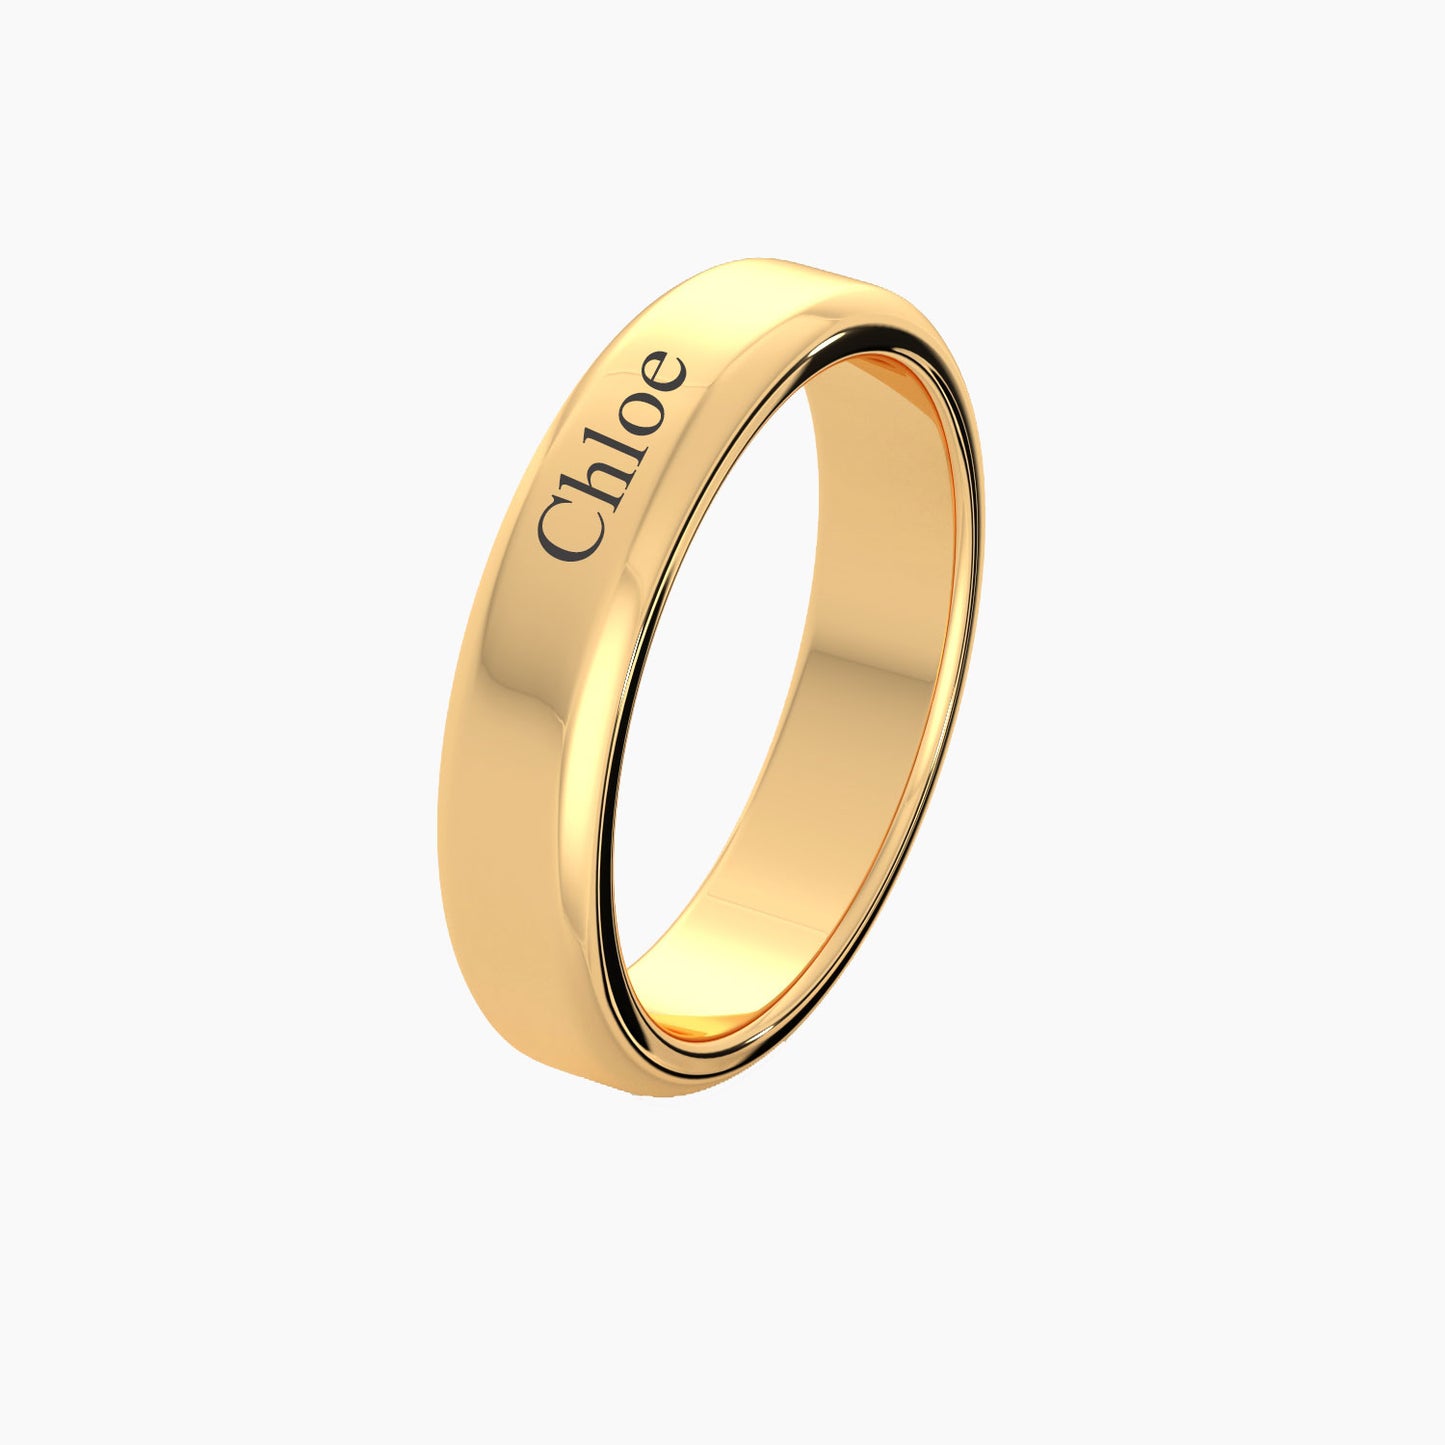 Irosk Inscribe Elegance Ring